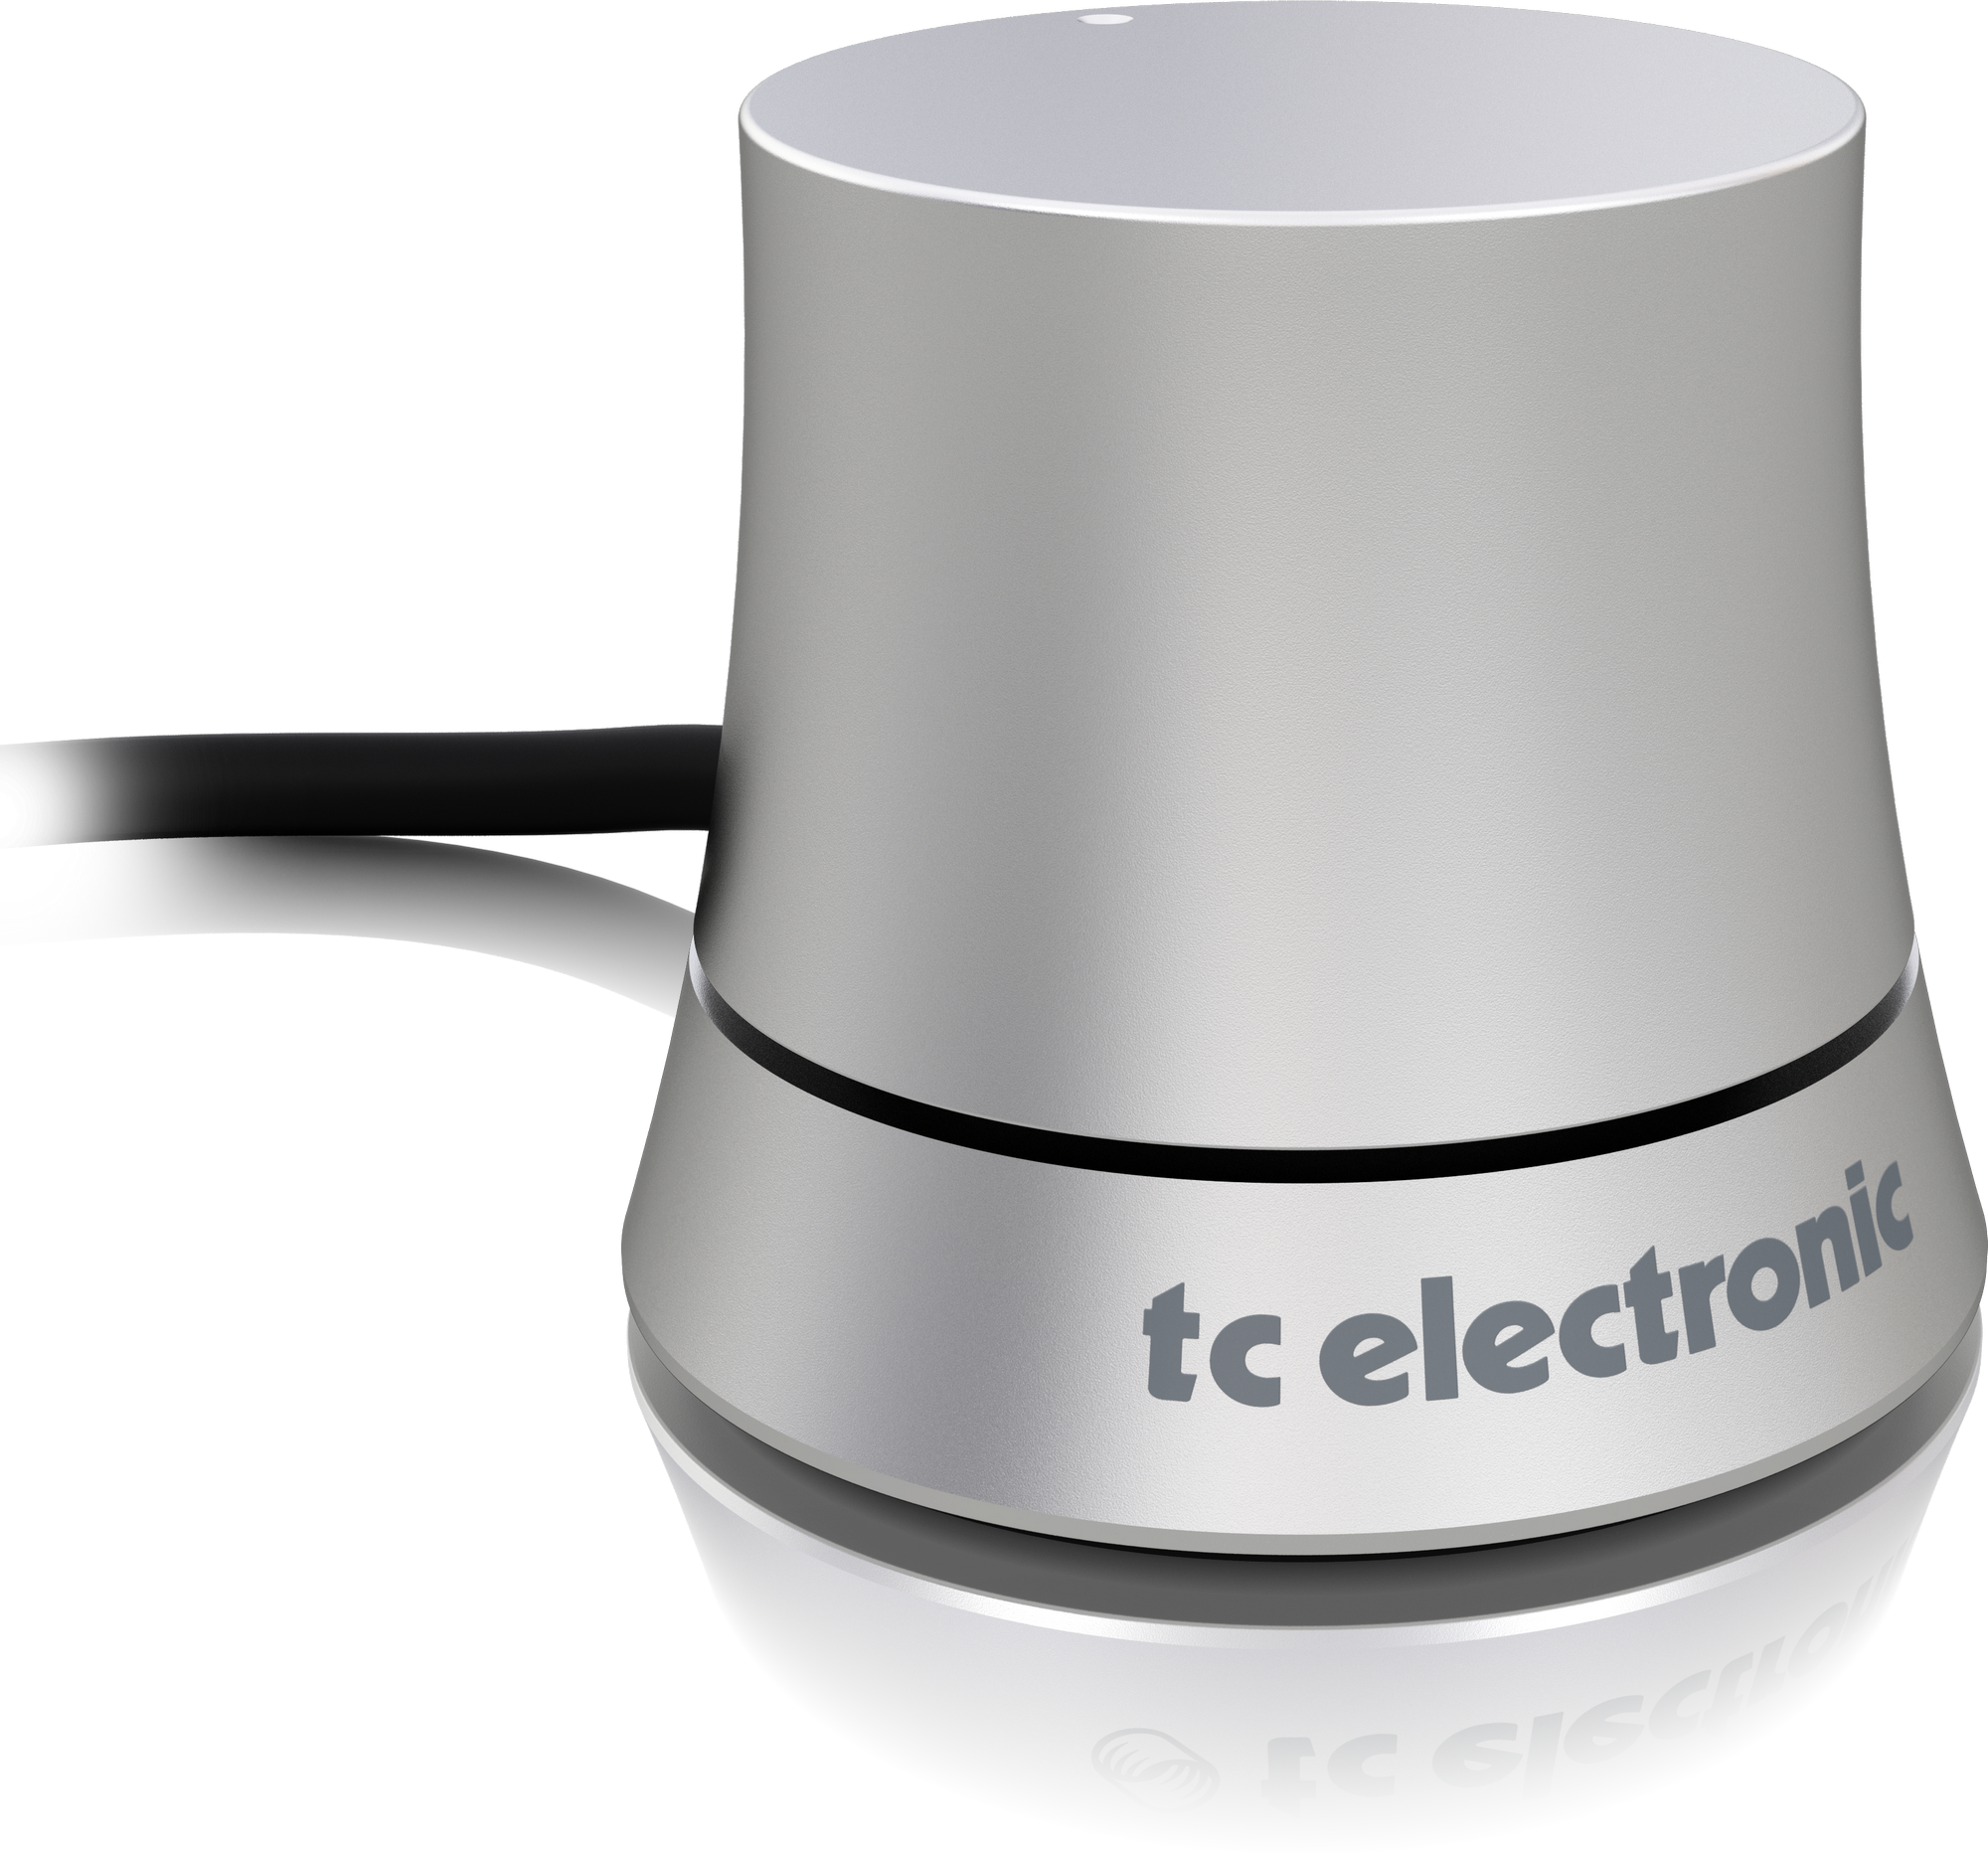 TC Electronic LEVEL PILOT C Desktop Speaker Volume Controller with 1/8 Connectivity